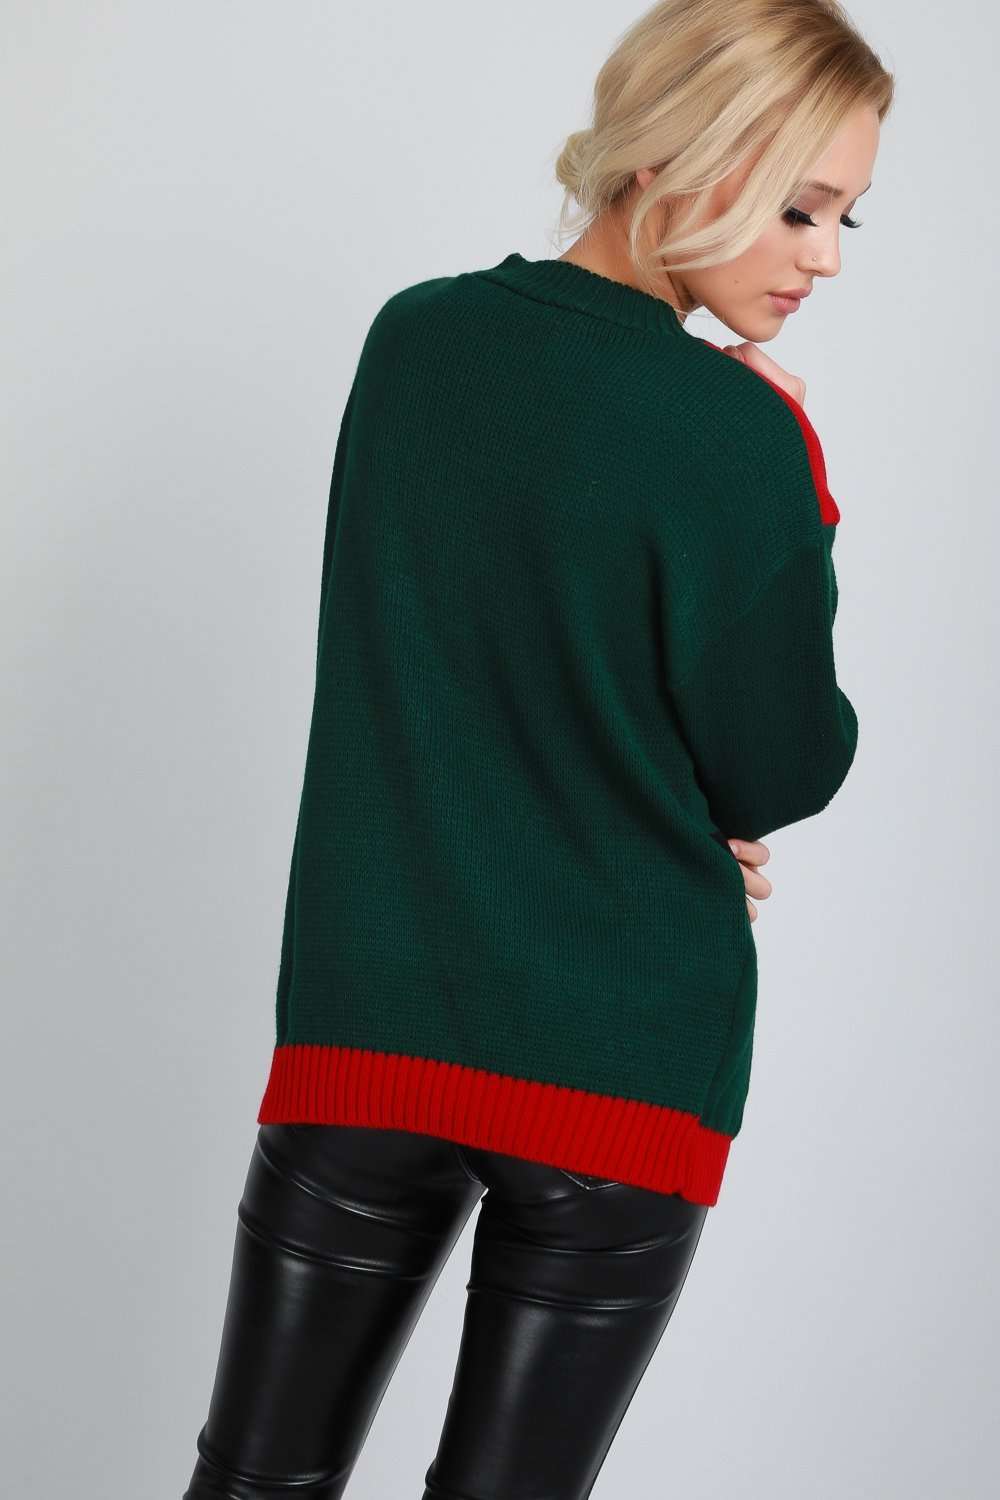 Long Sleeve Christmas Elf Costume Oversized Knitted Jumper - bejealous-com